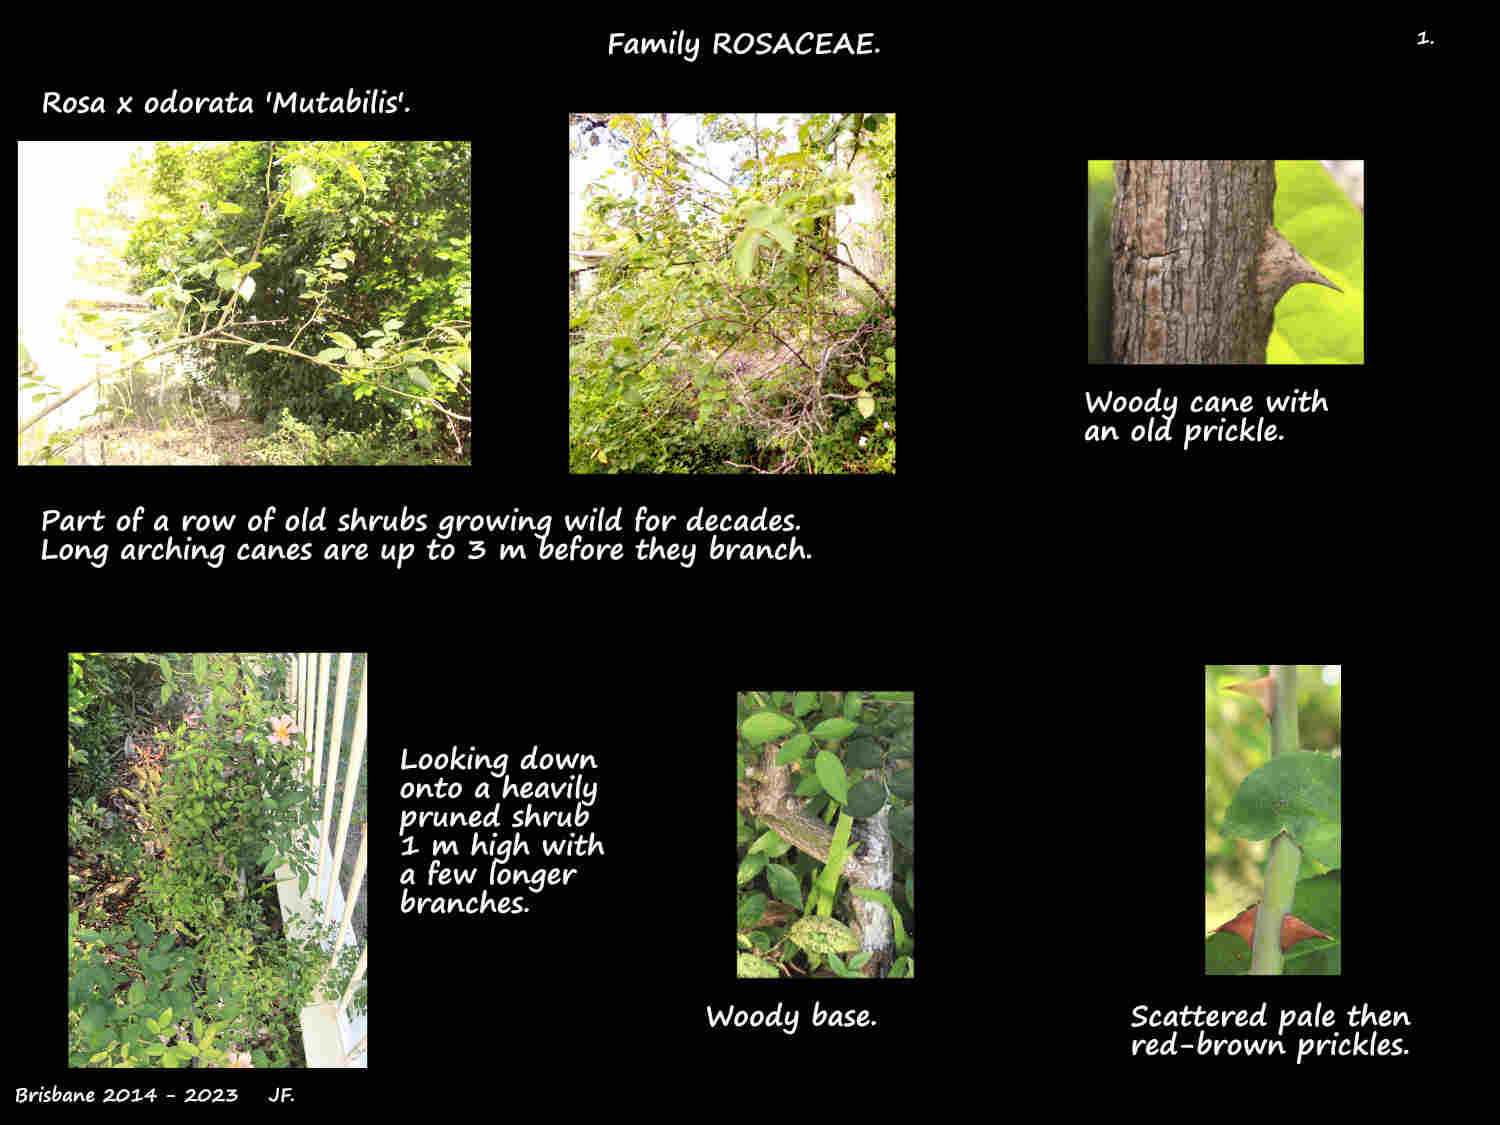 1 2 Rosa x odorata 'Mutabilis' shrubs